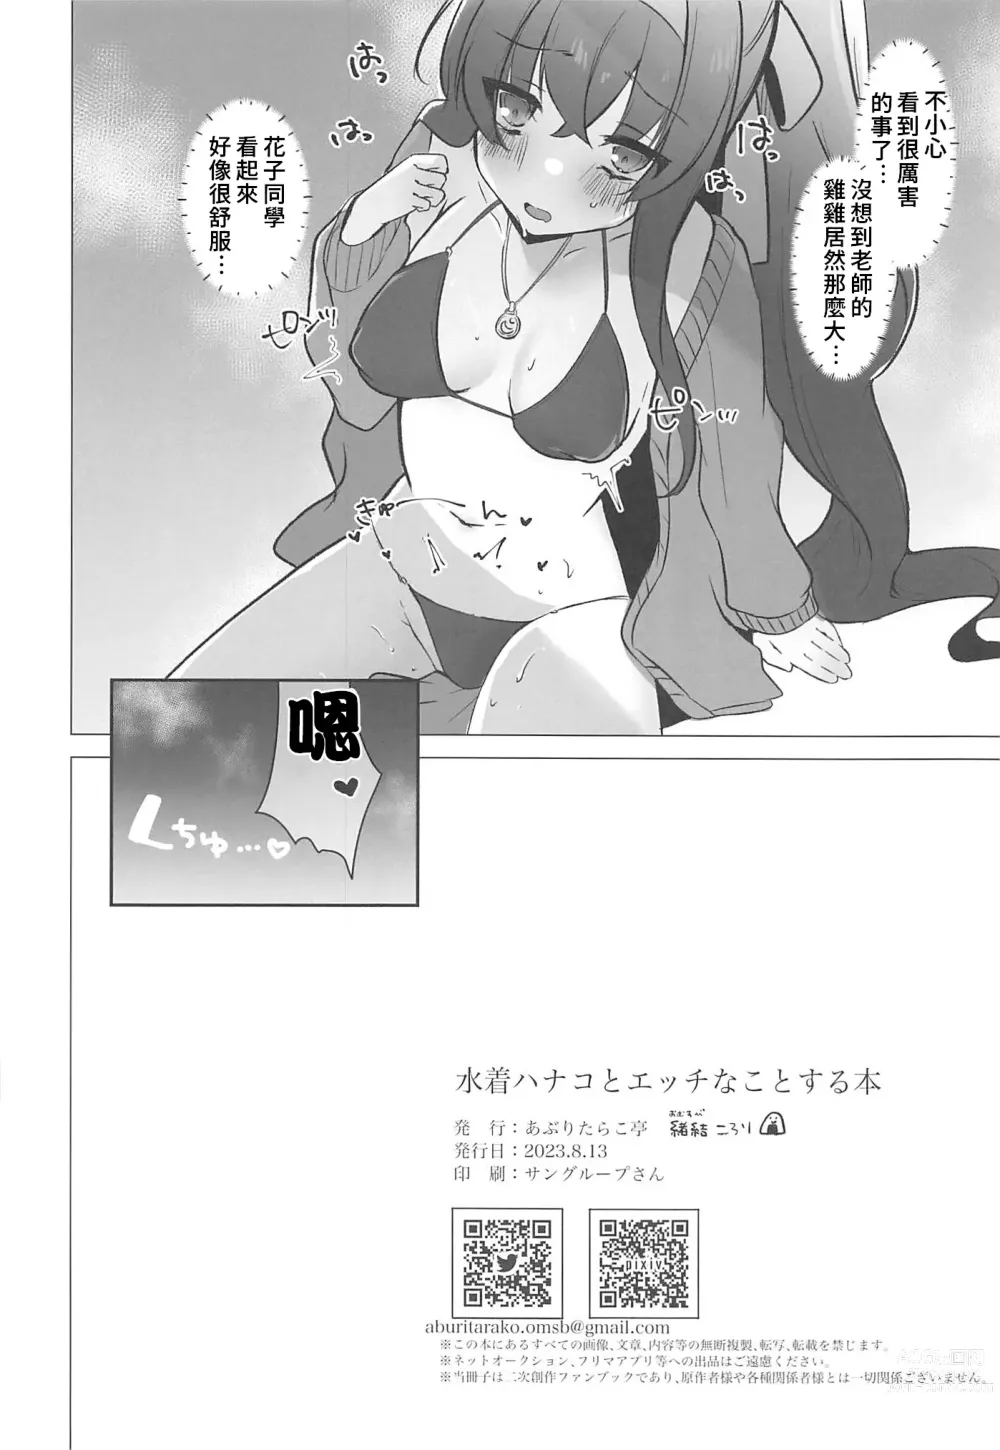 Page 15 of doujinshi 與泳裝花子做色色的事本本